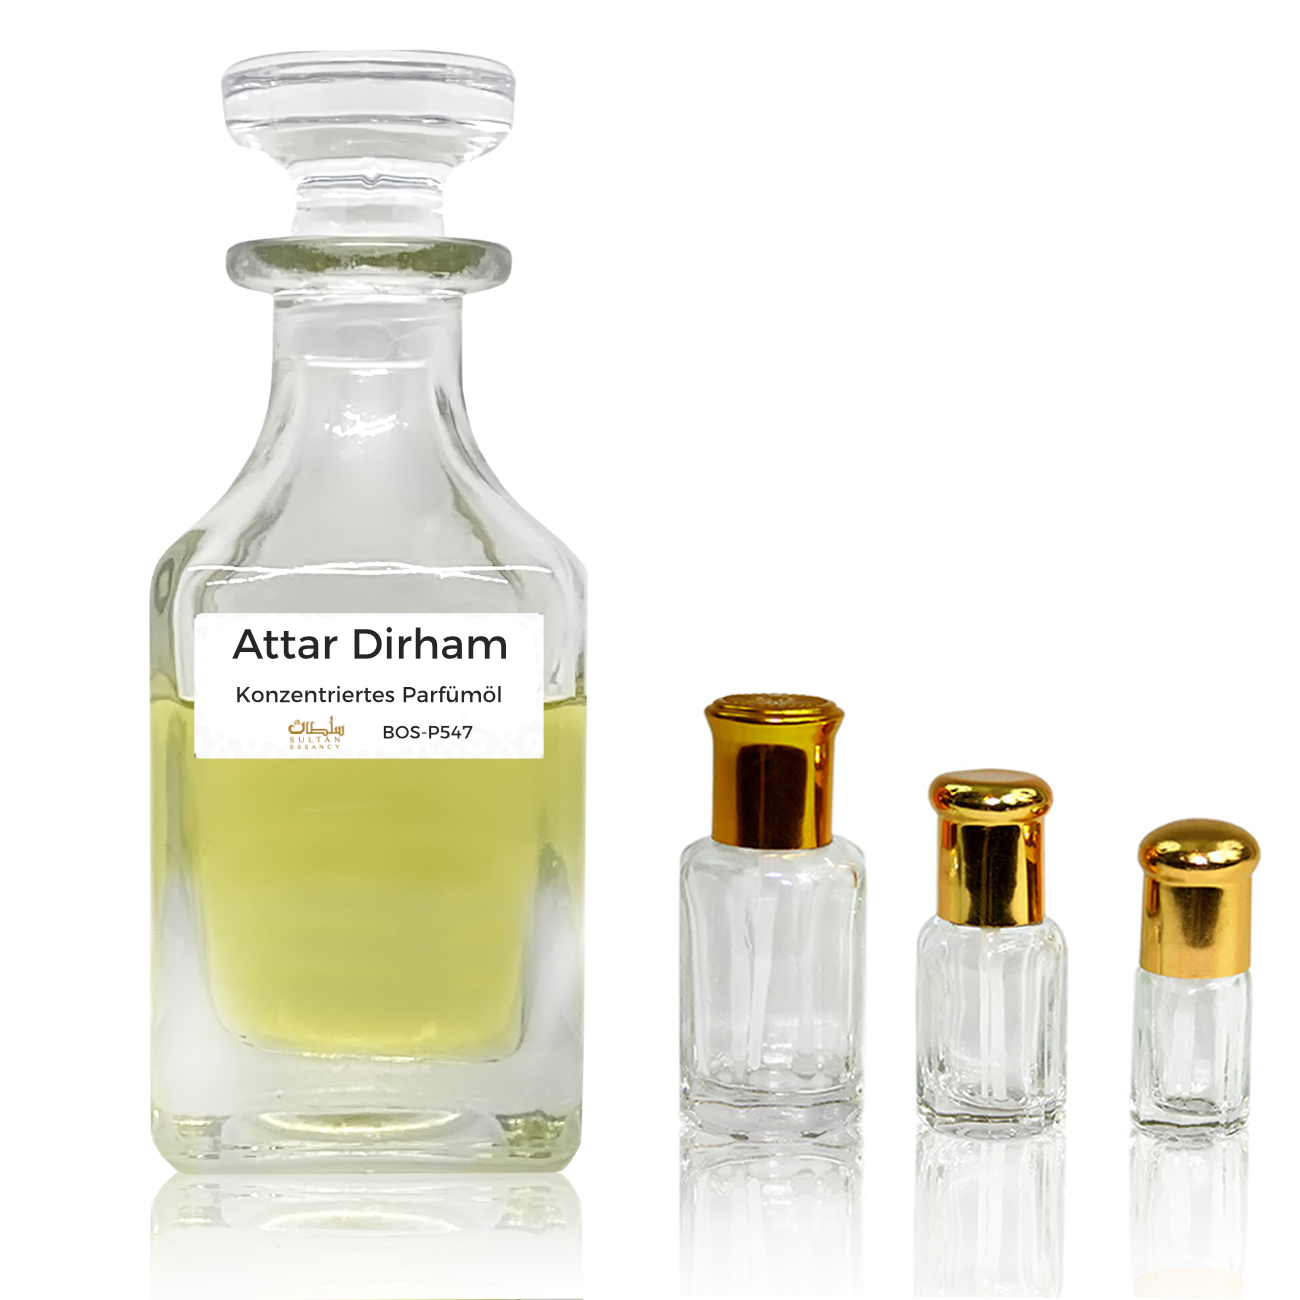 Attar Dirham Sultan Essancy Perfume free from alcohol Arabian Attar